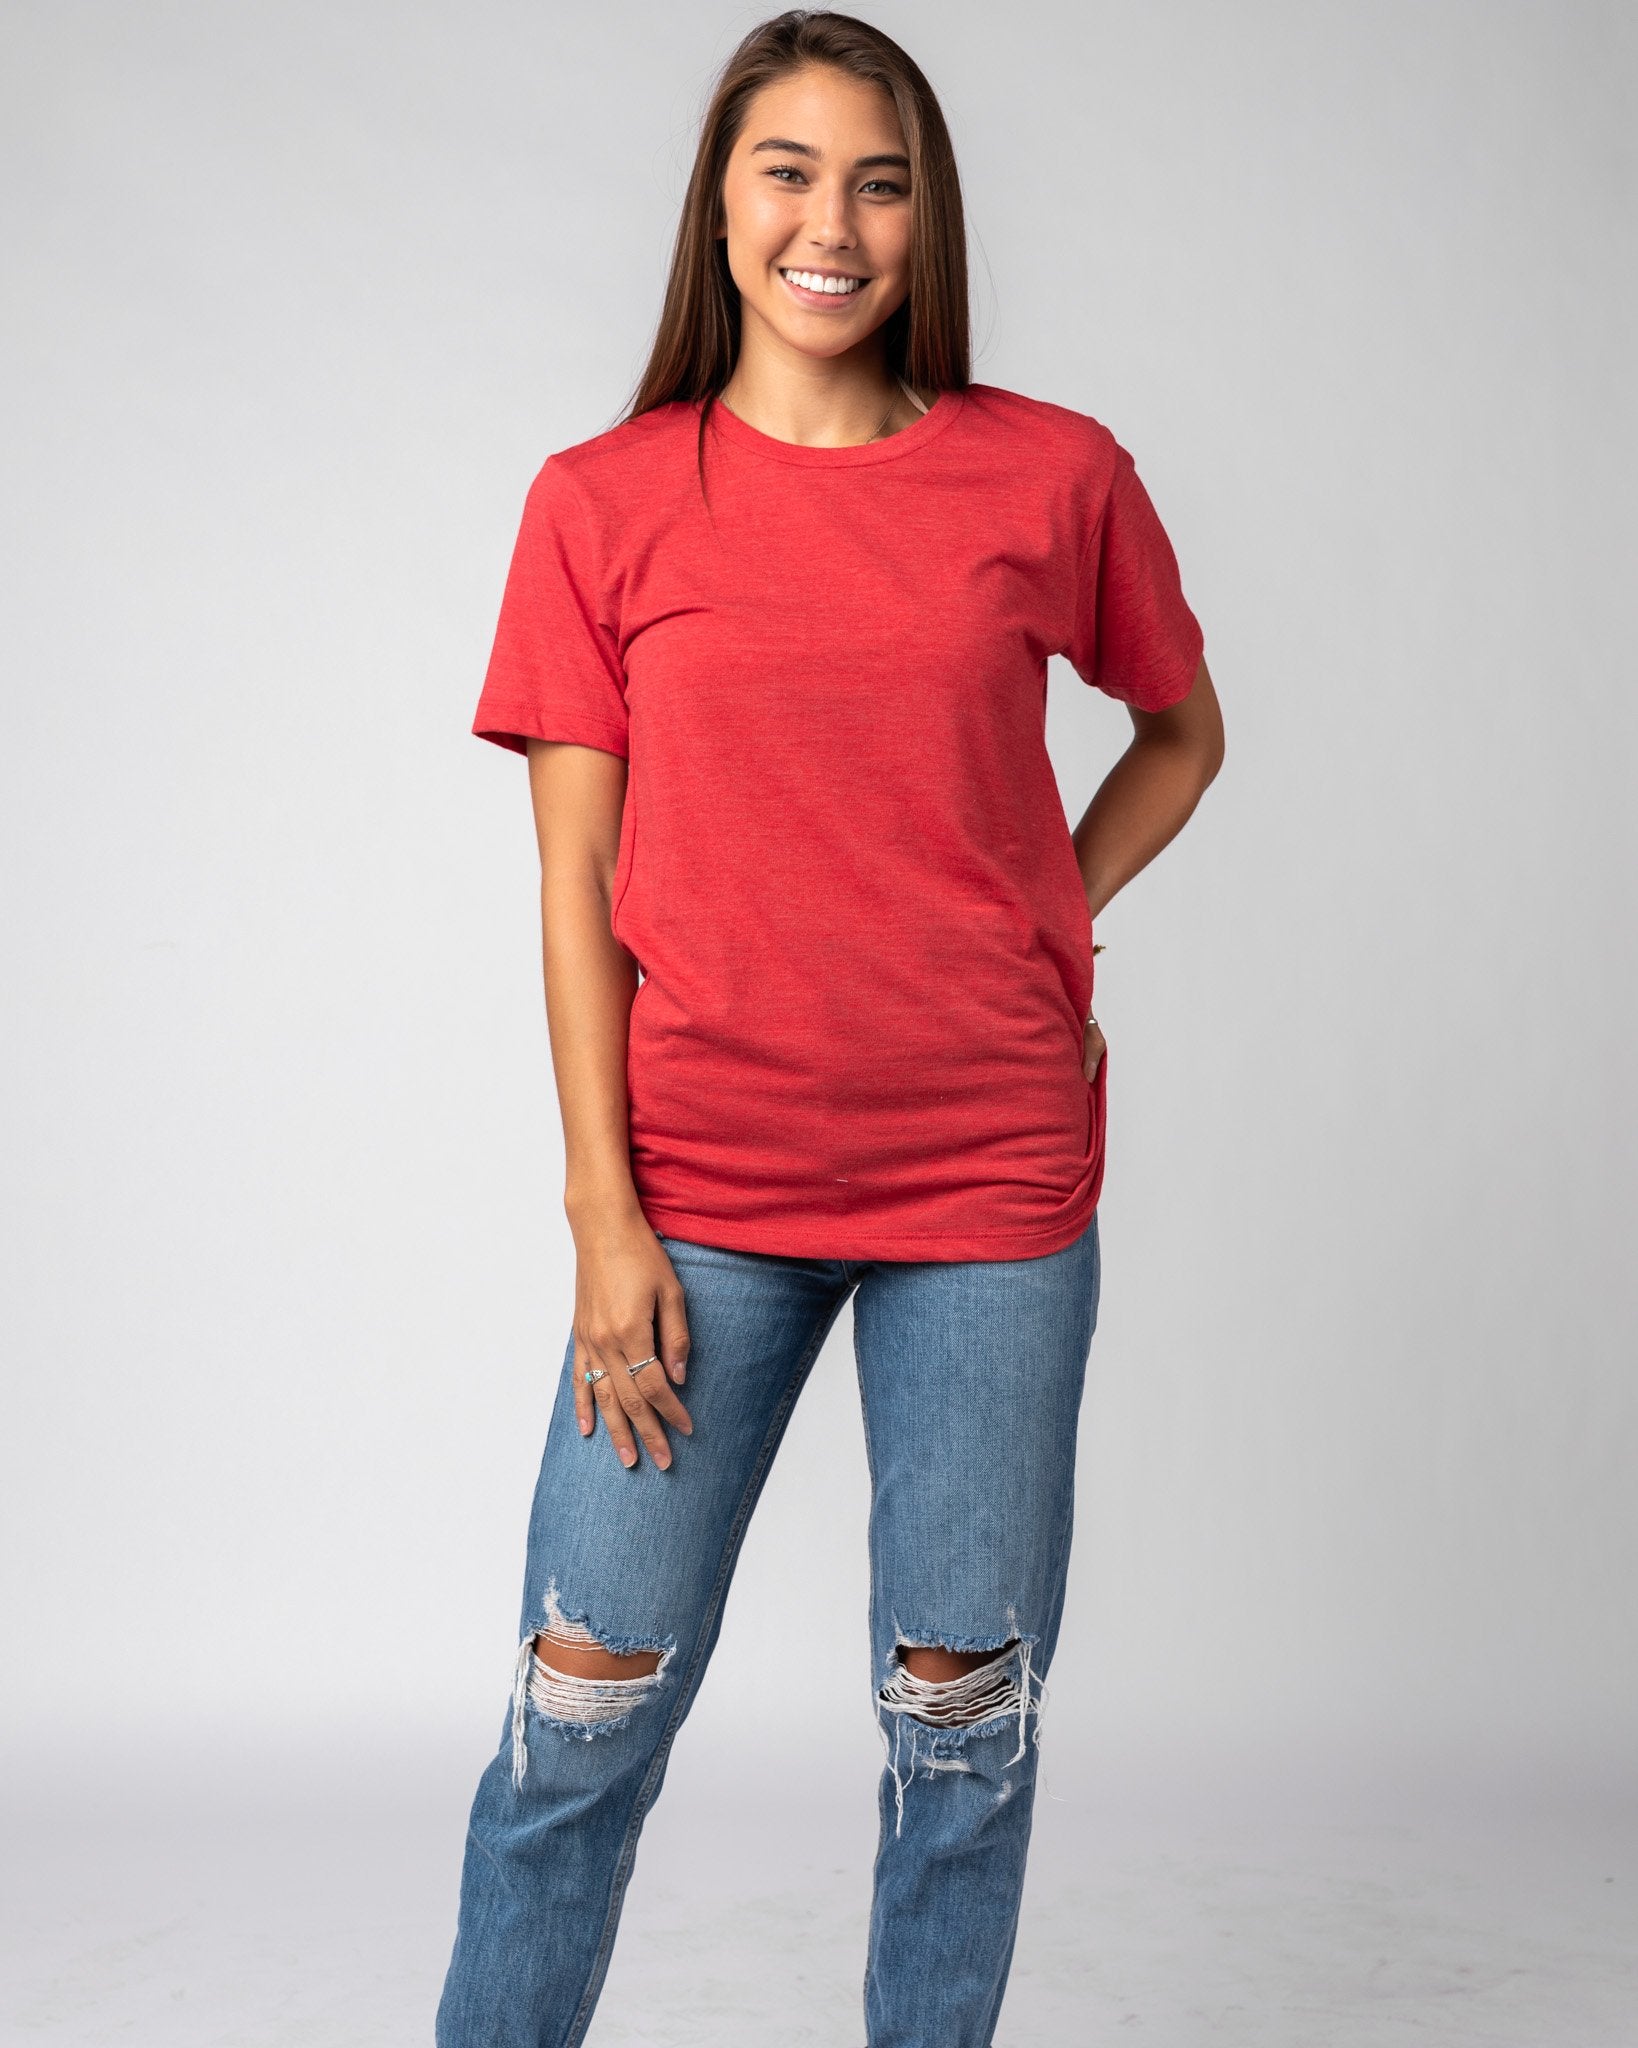 Women's Sportiqe Heather Red Atlanta Dream Comfy Super-Soft Tri-Blend T-Shirt Size: Small